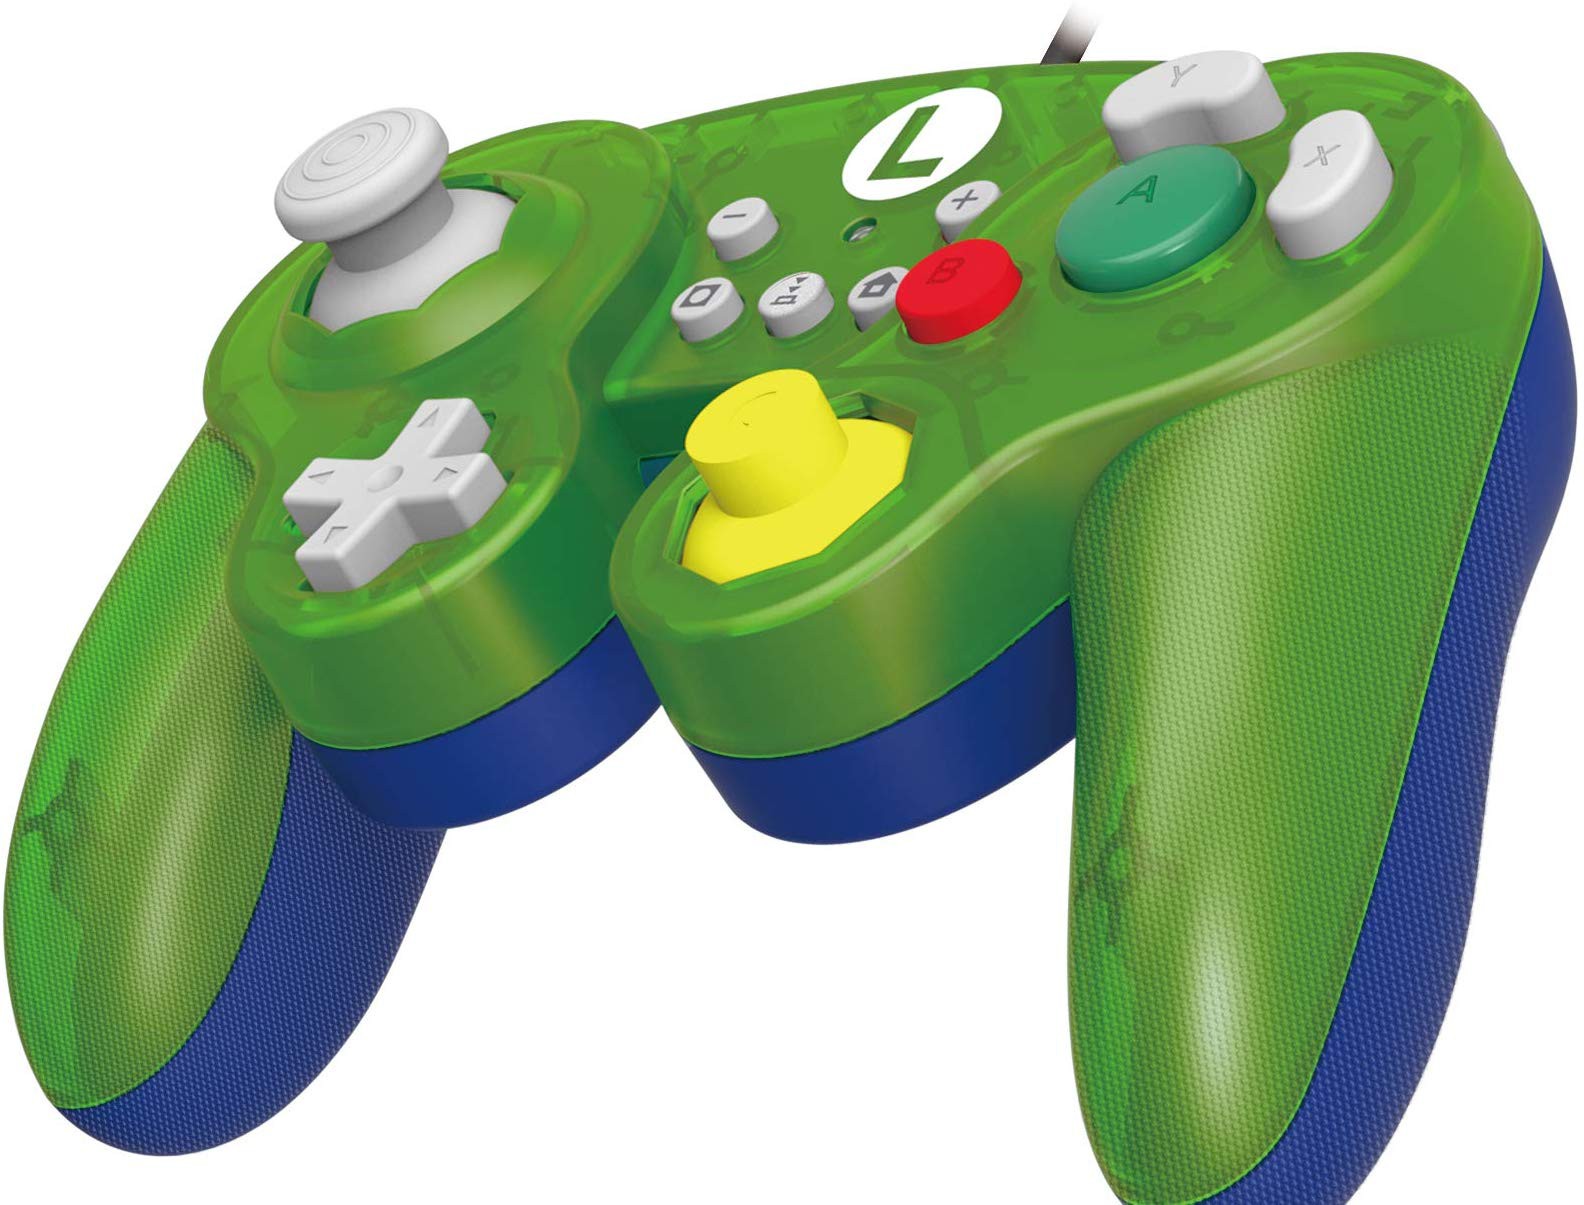 HORI Nintendo Switch Battle Pad (Luigi) GameCube Style Controller